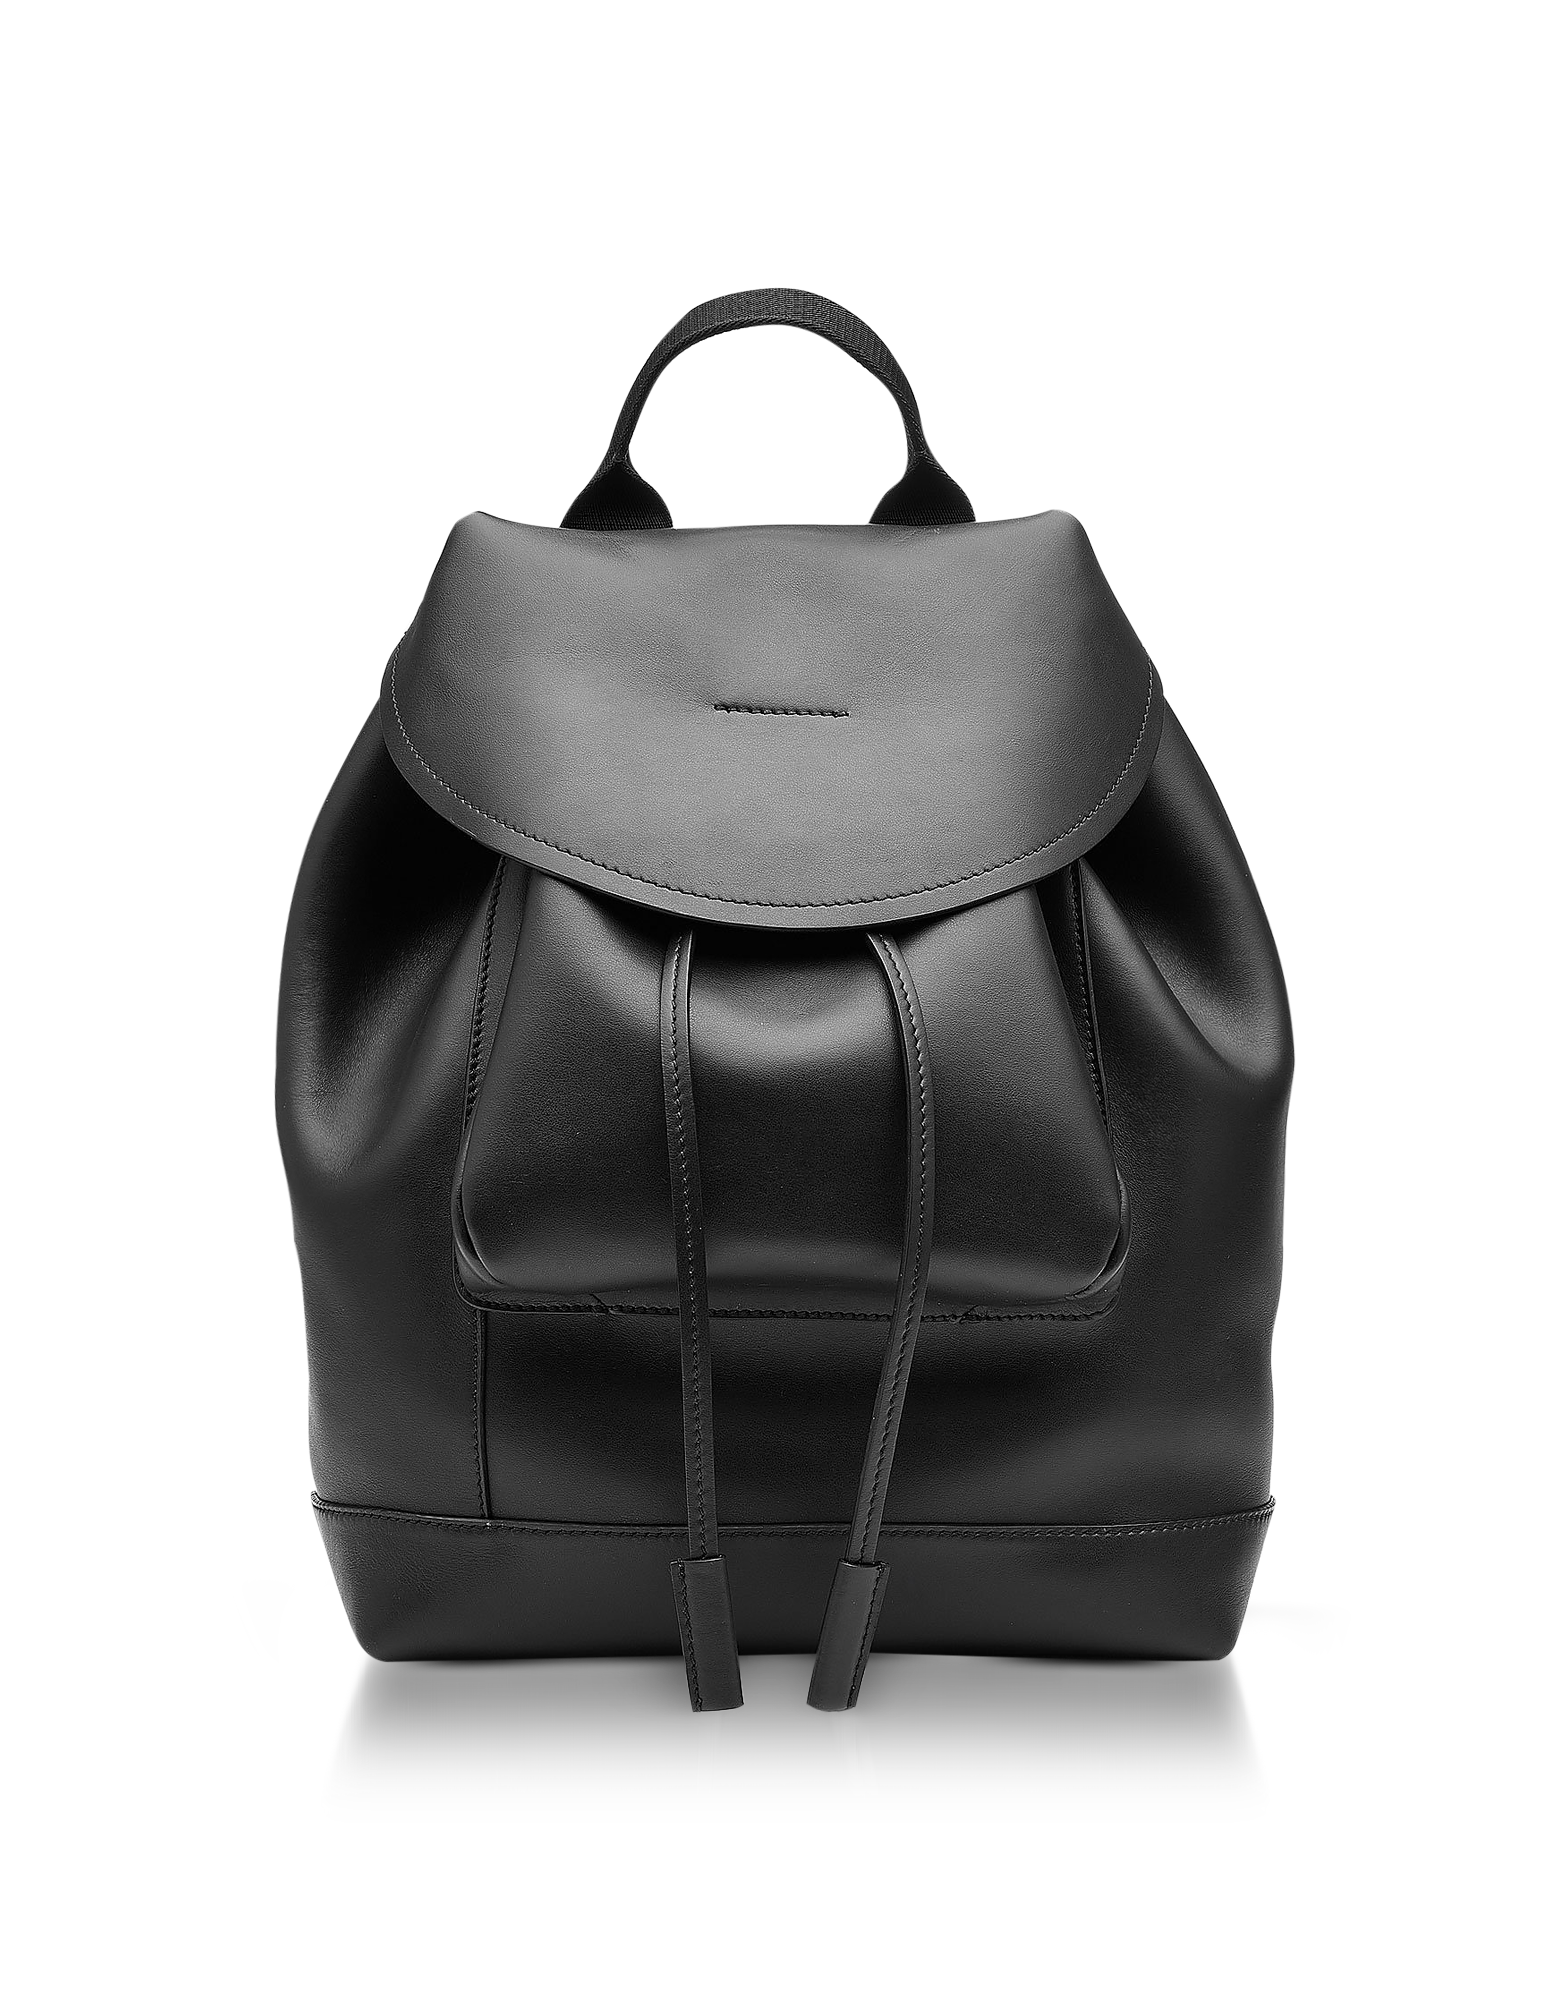 Designer Handbags 2017 - FORZIERI Canada